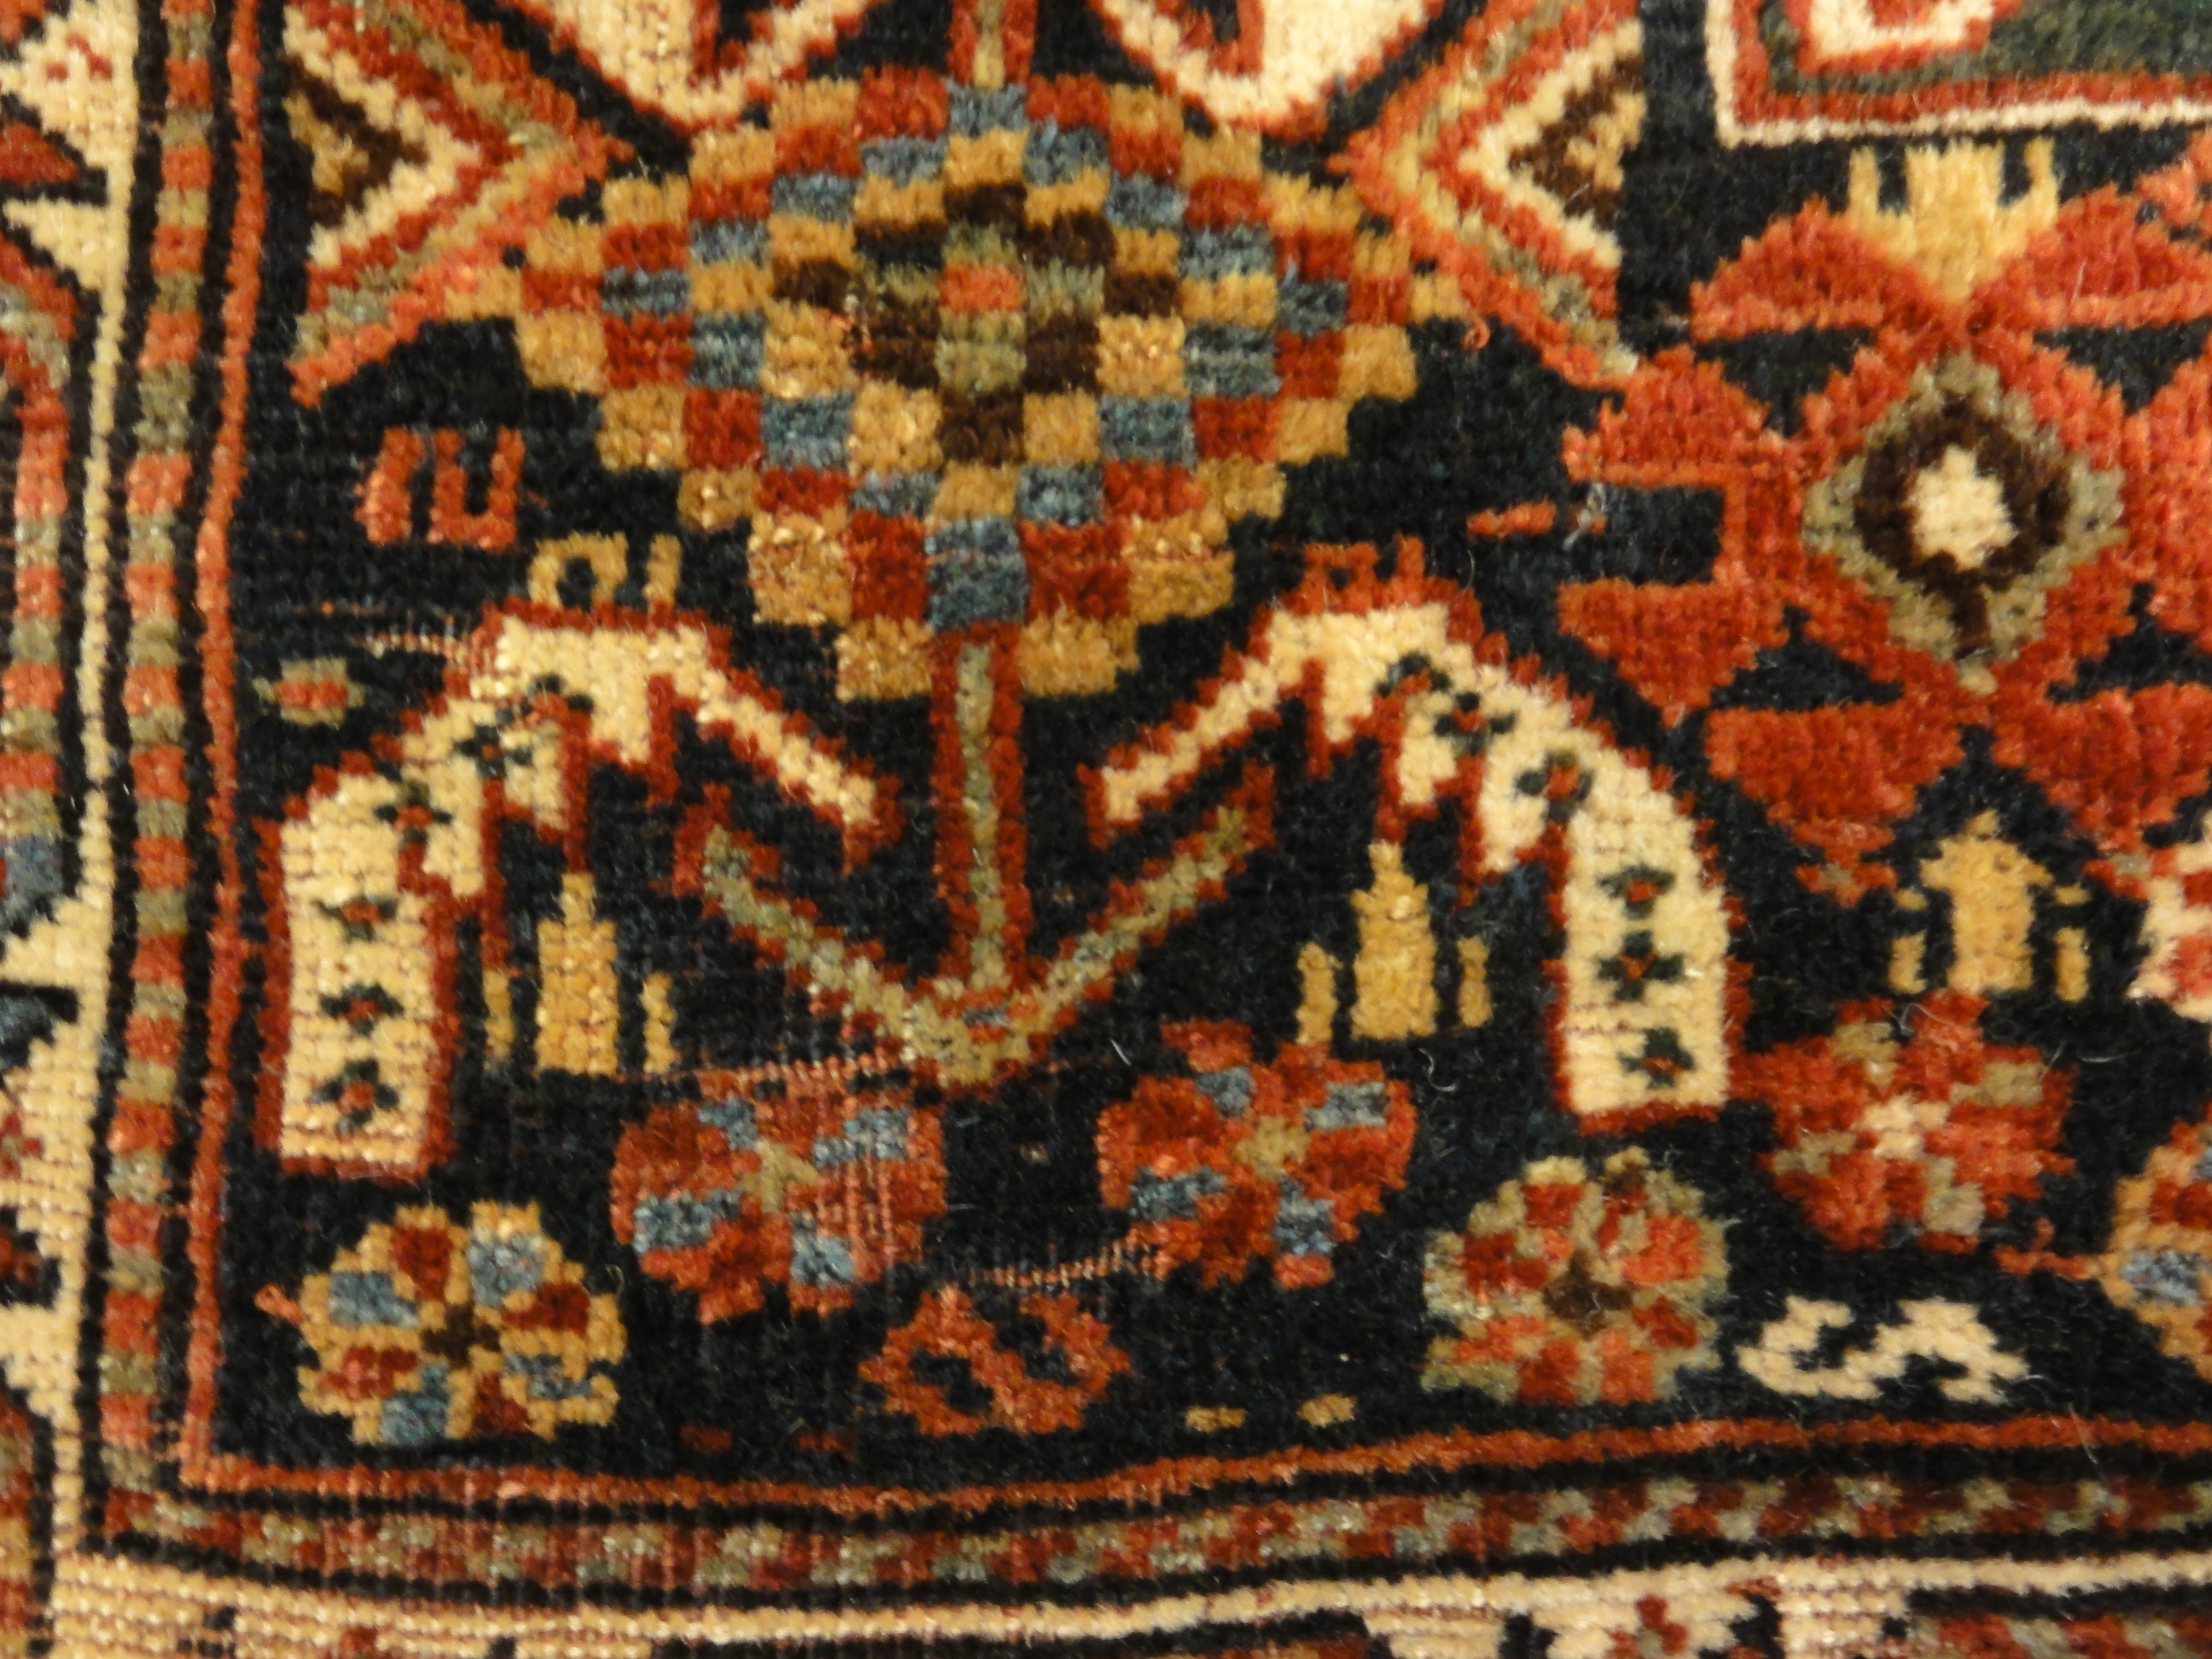 Antique Khamseh Southwest Persian Bagface. A piece of antique woven carpet art sold by Santa Barbara Design Center Rugs and More in Santa Barbara, CA.